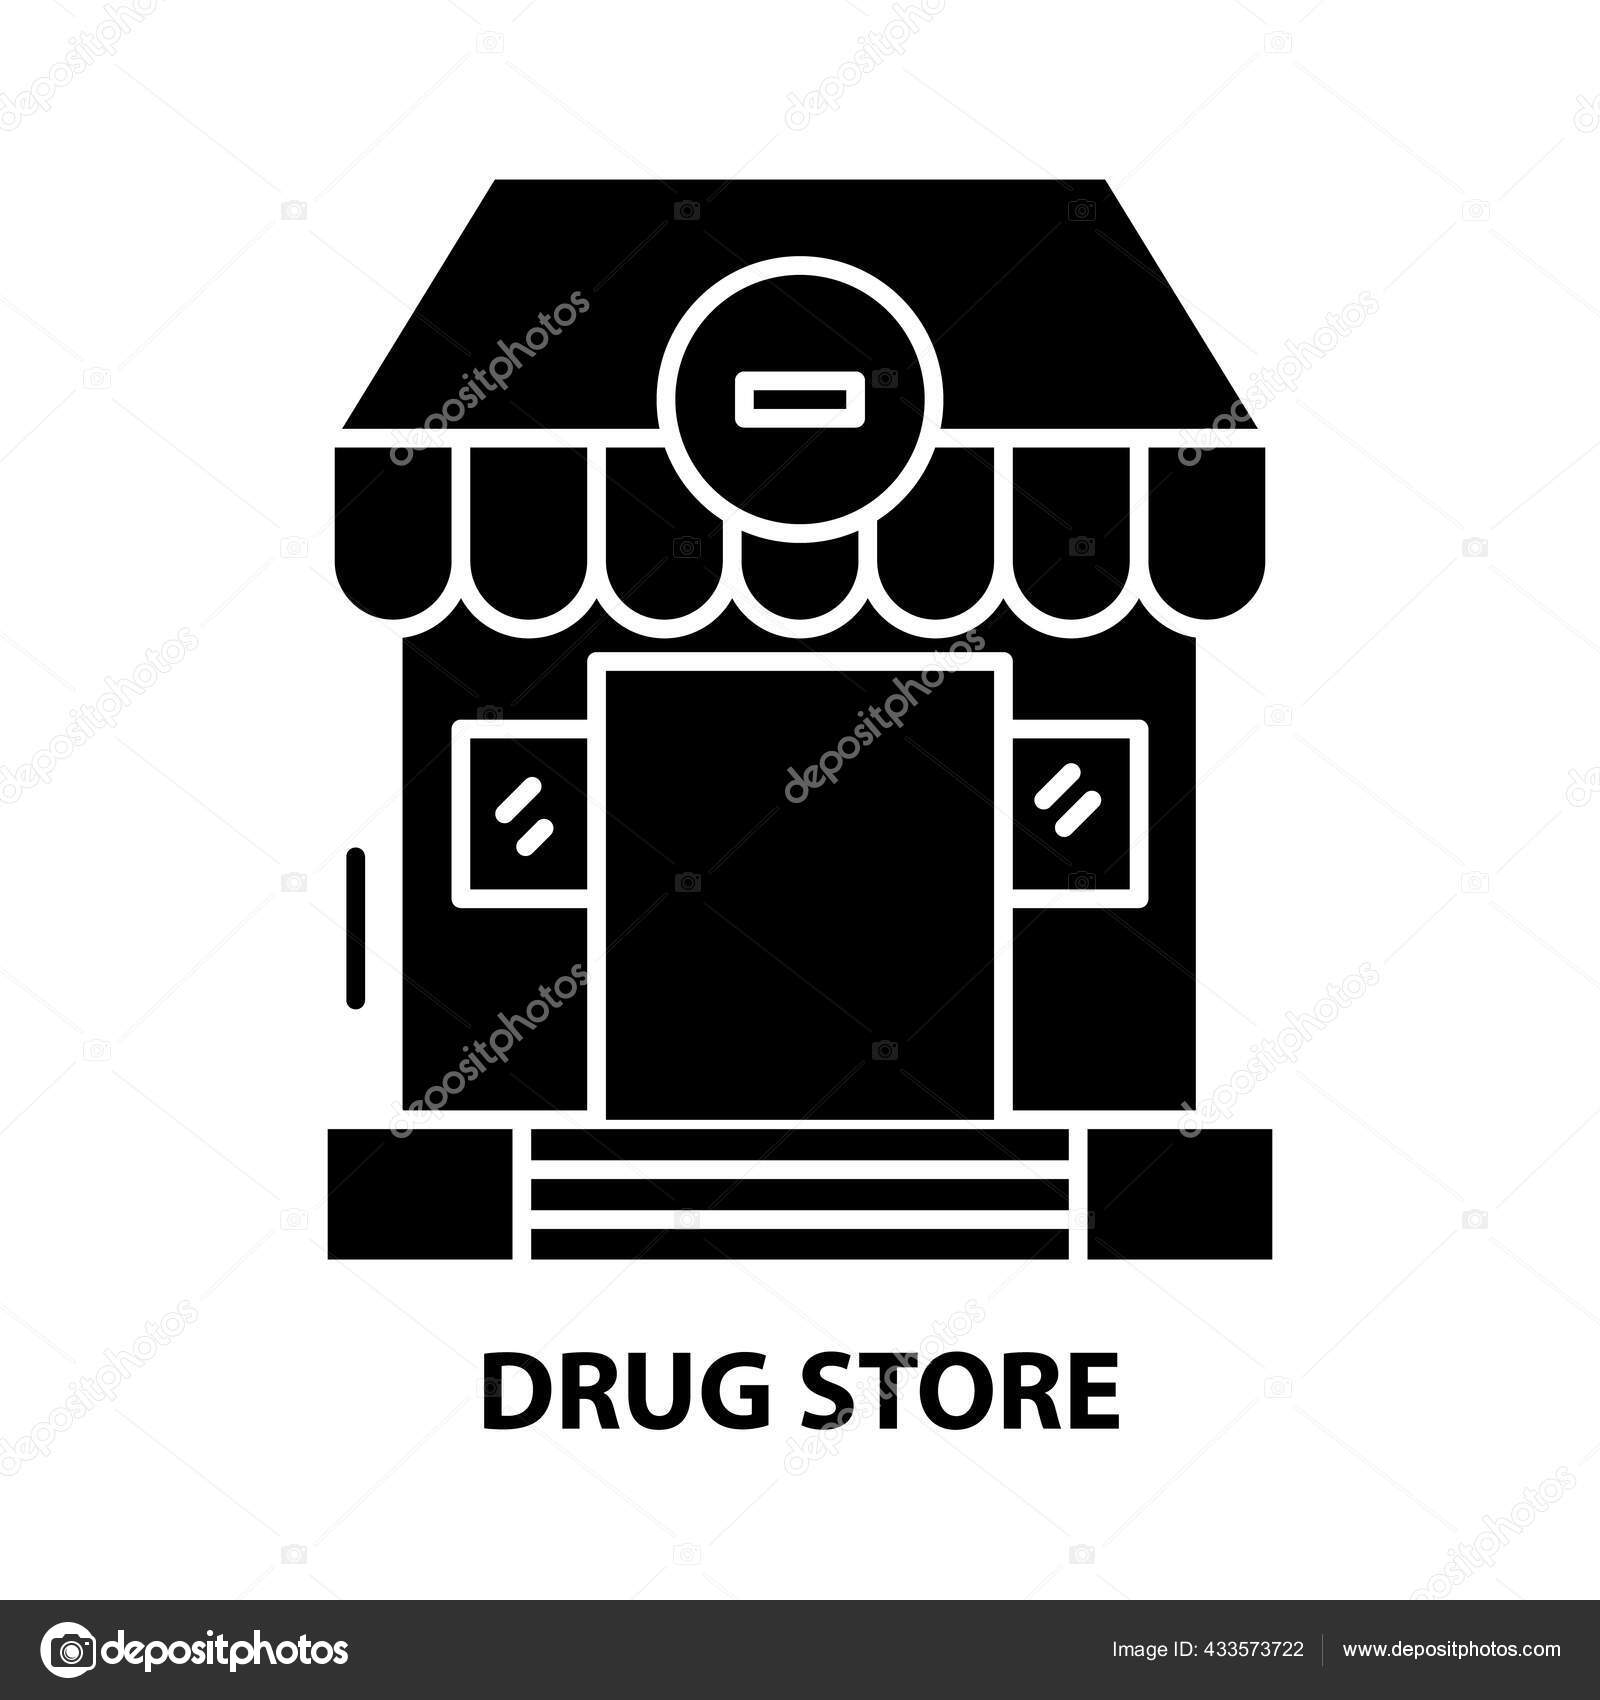 drugstore clipart black and white